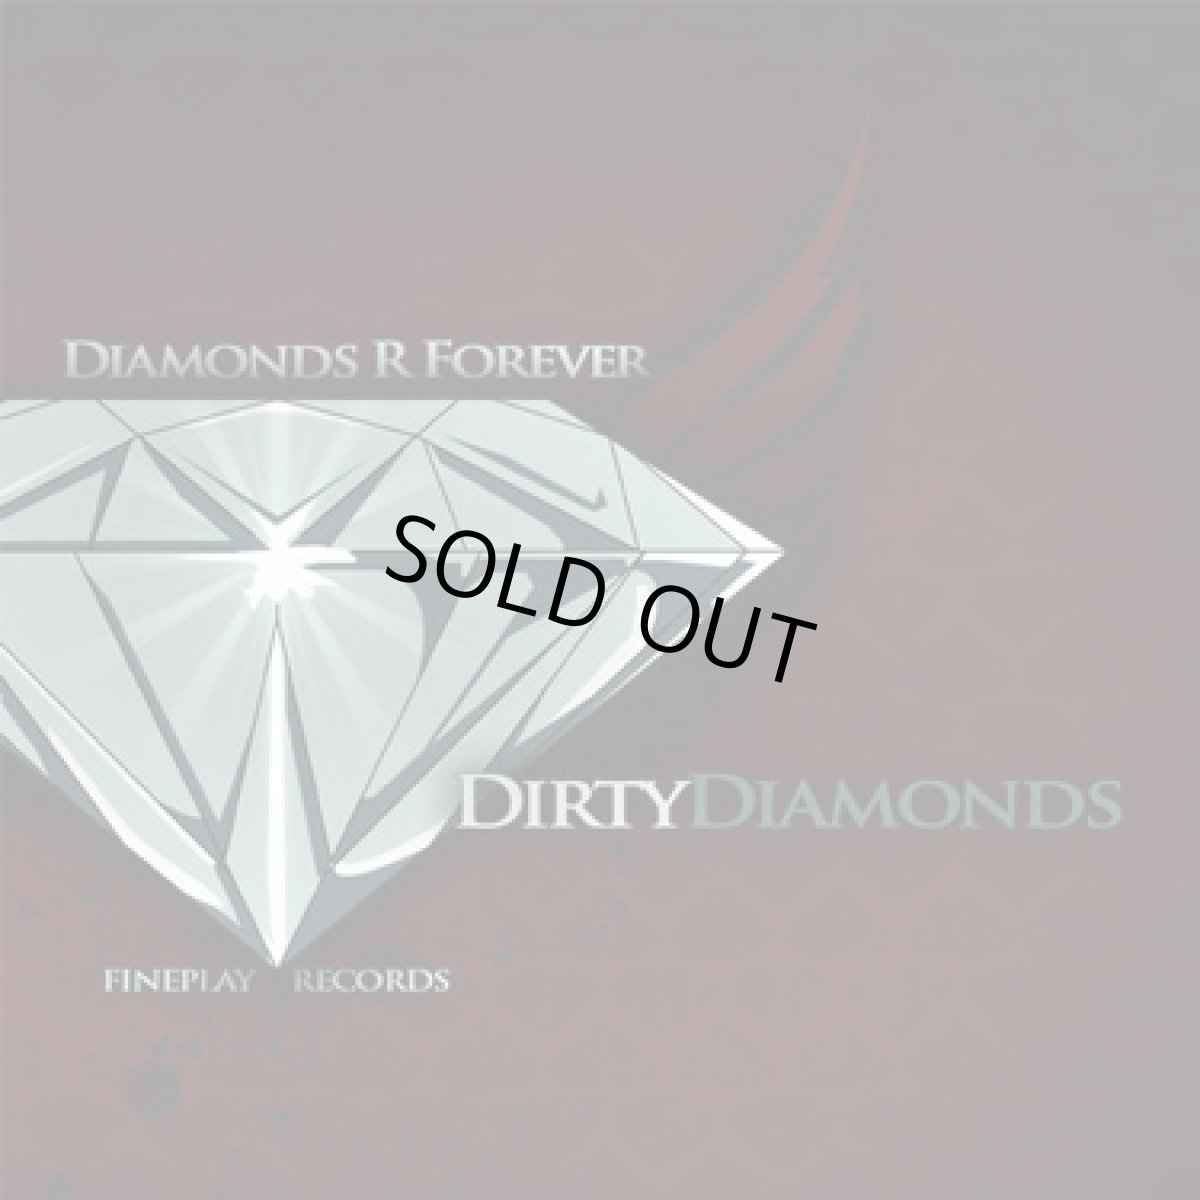 画像1: CD「Dirty Diamonds / Diamonds R Forever」 (1)